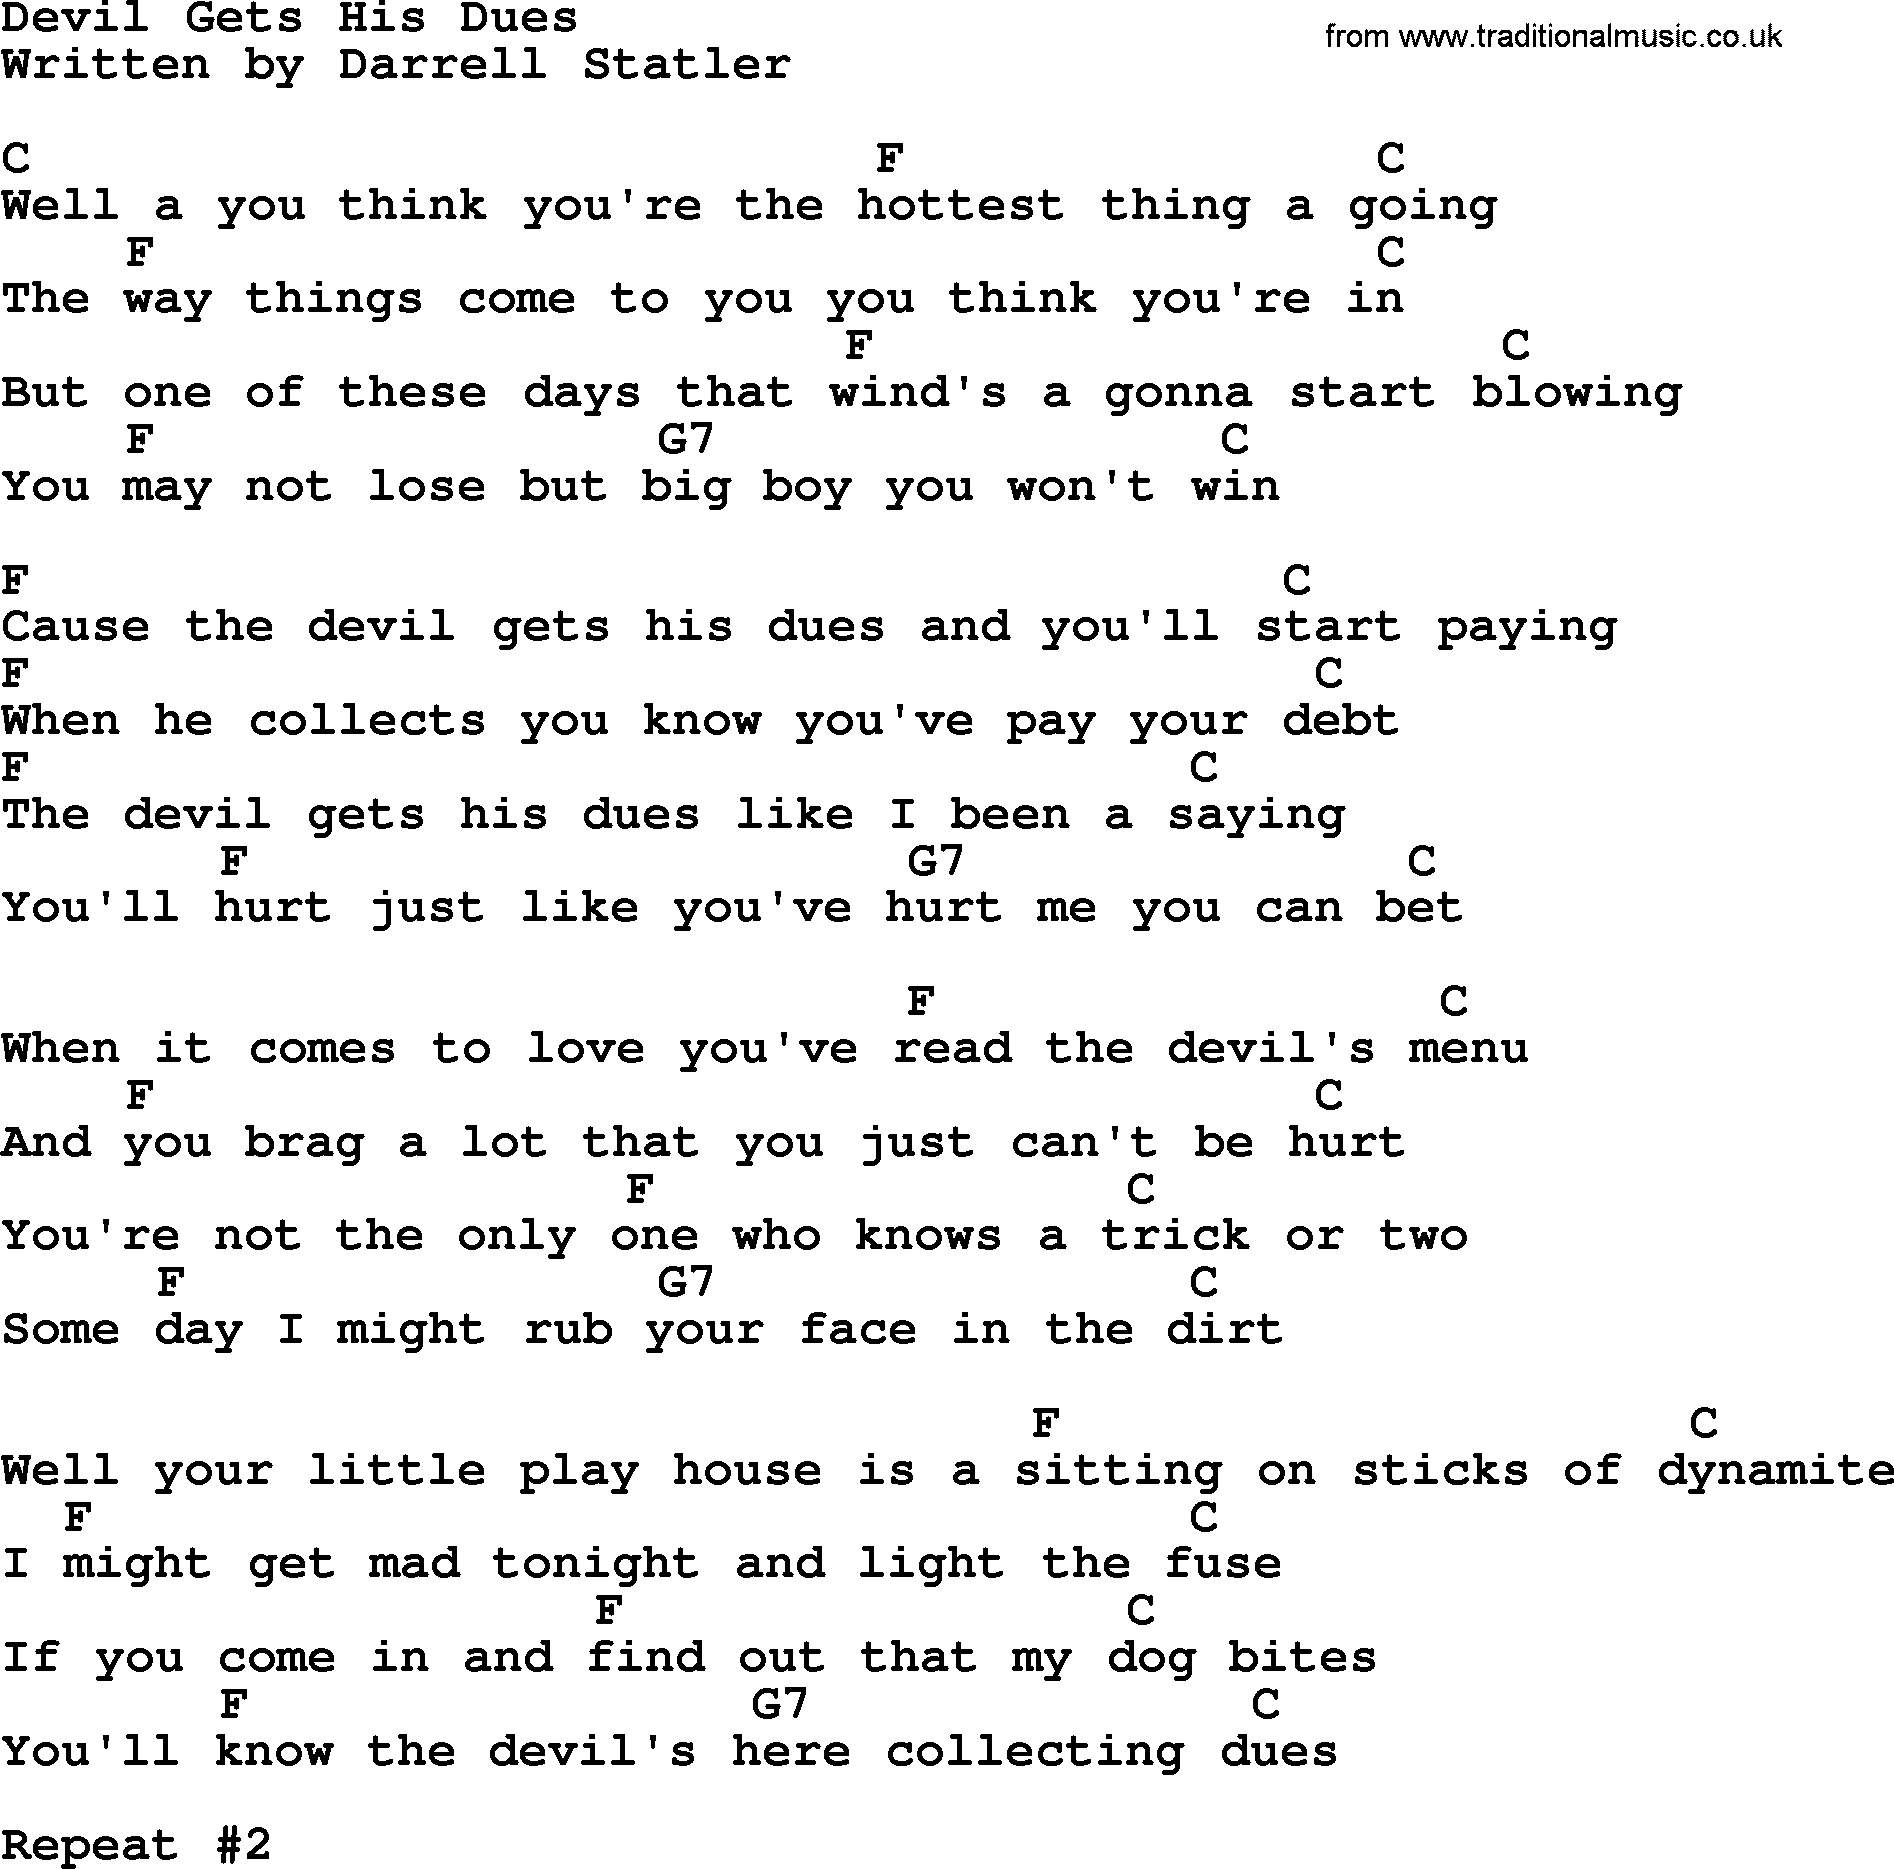 Loretta Lynn song: Devil Gets His Dues lyrics and chords